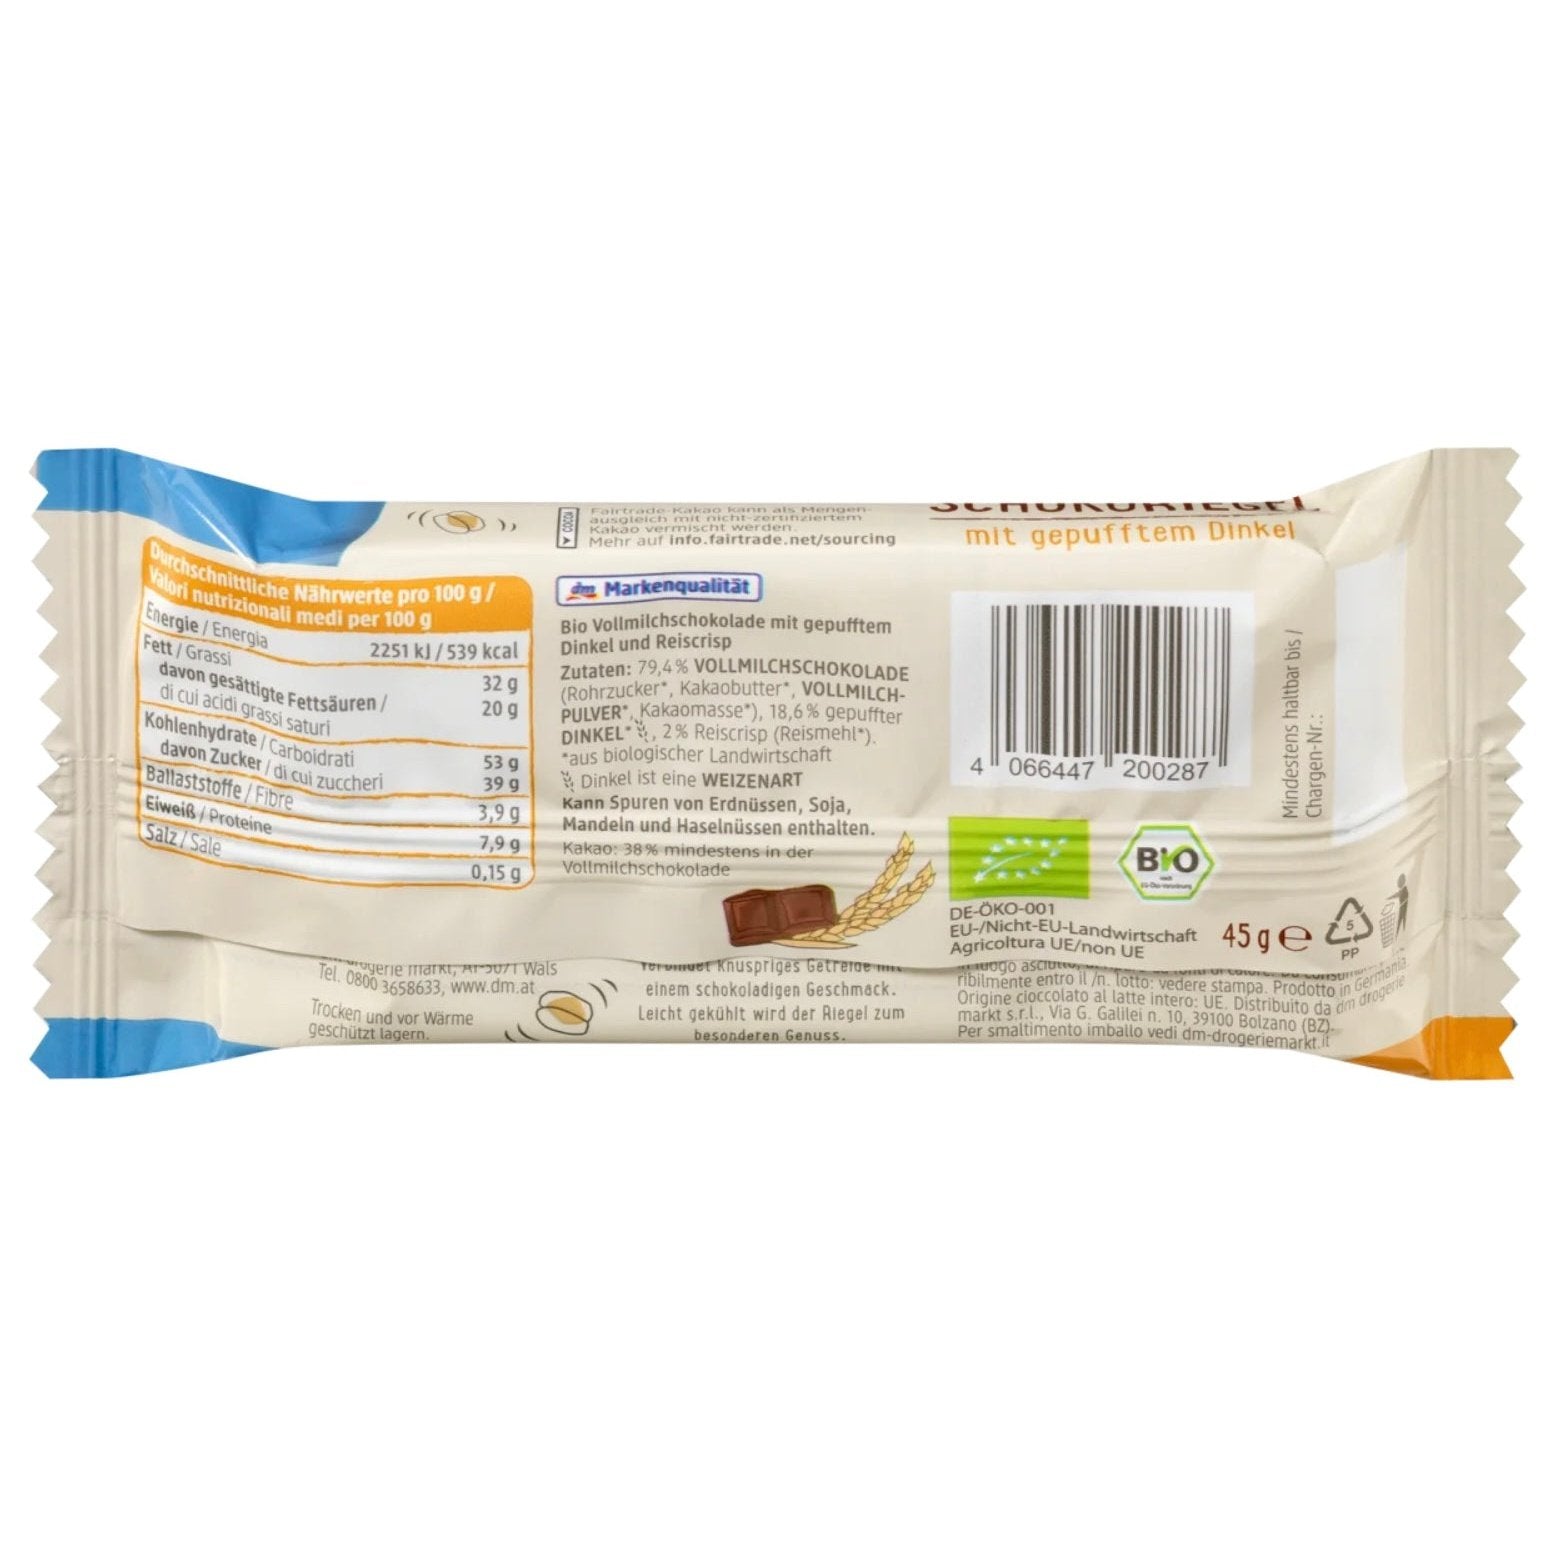 bio organic chocolate bar back packaging